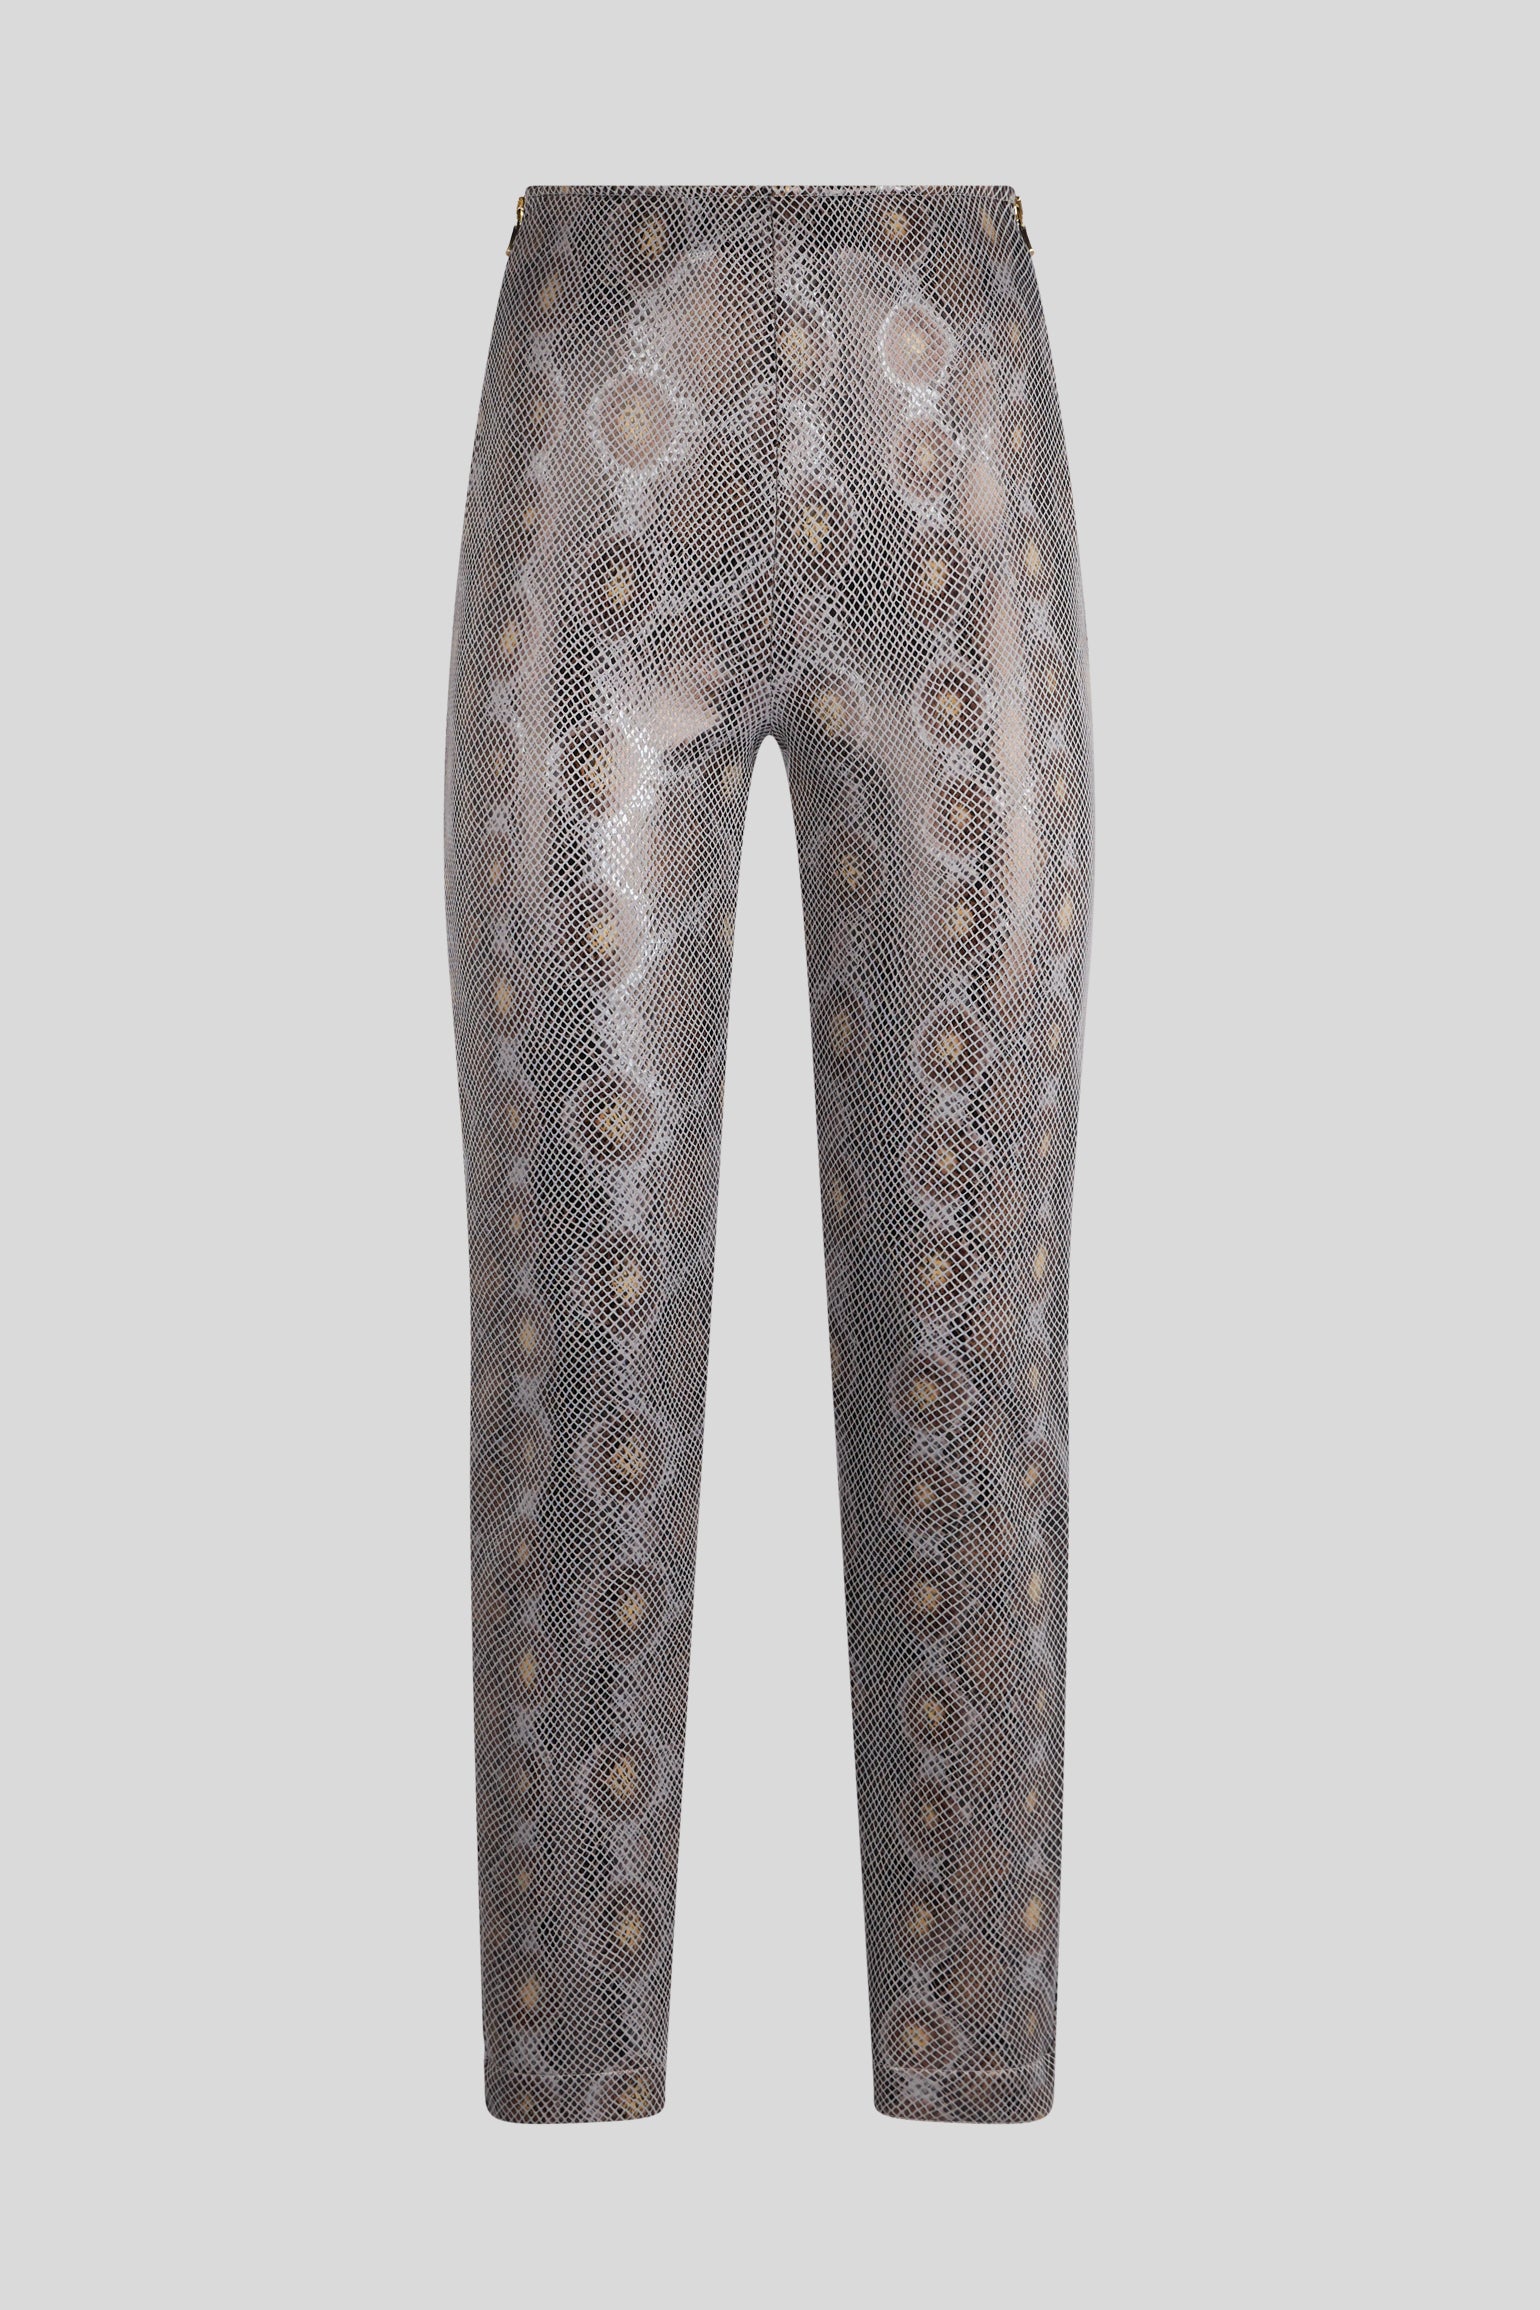 PATRIZIA PEPE Trousers with Python Print